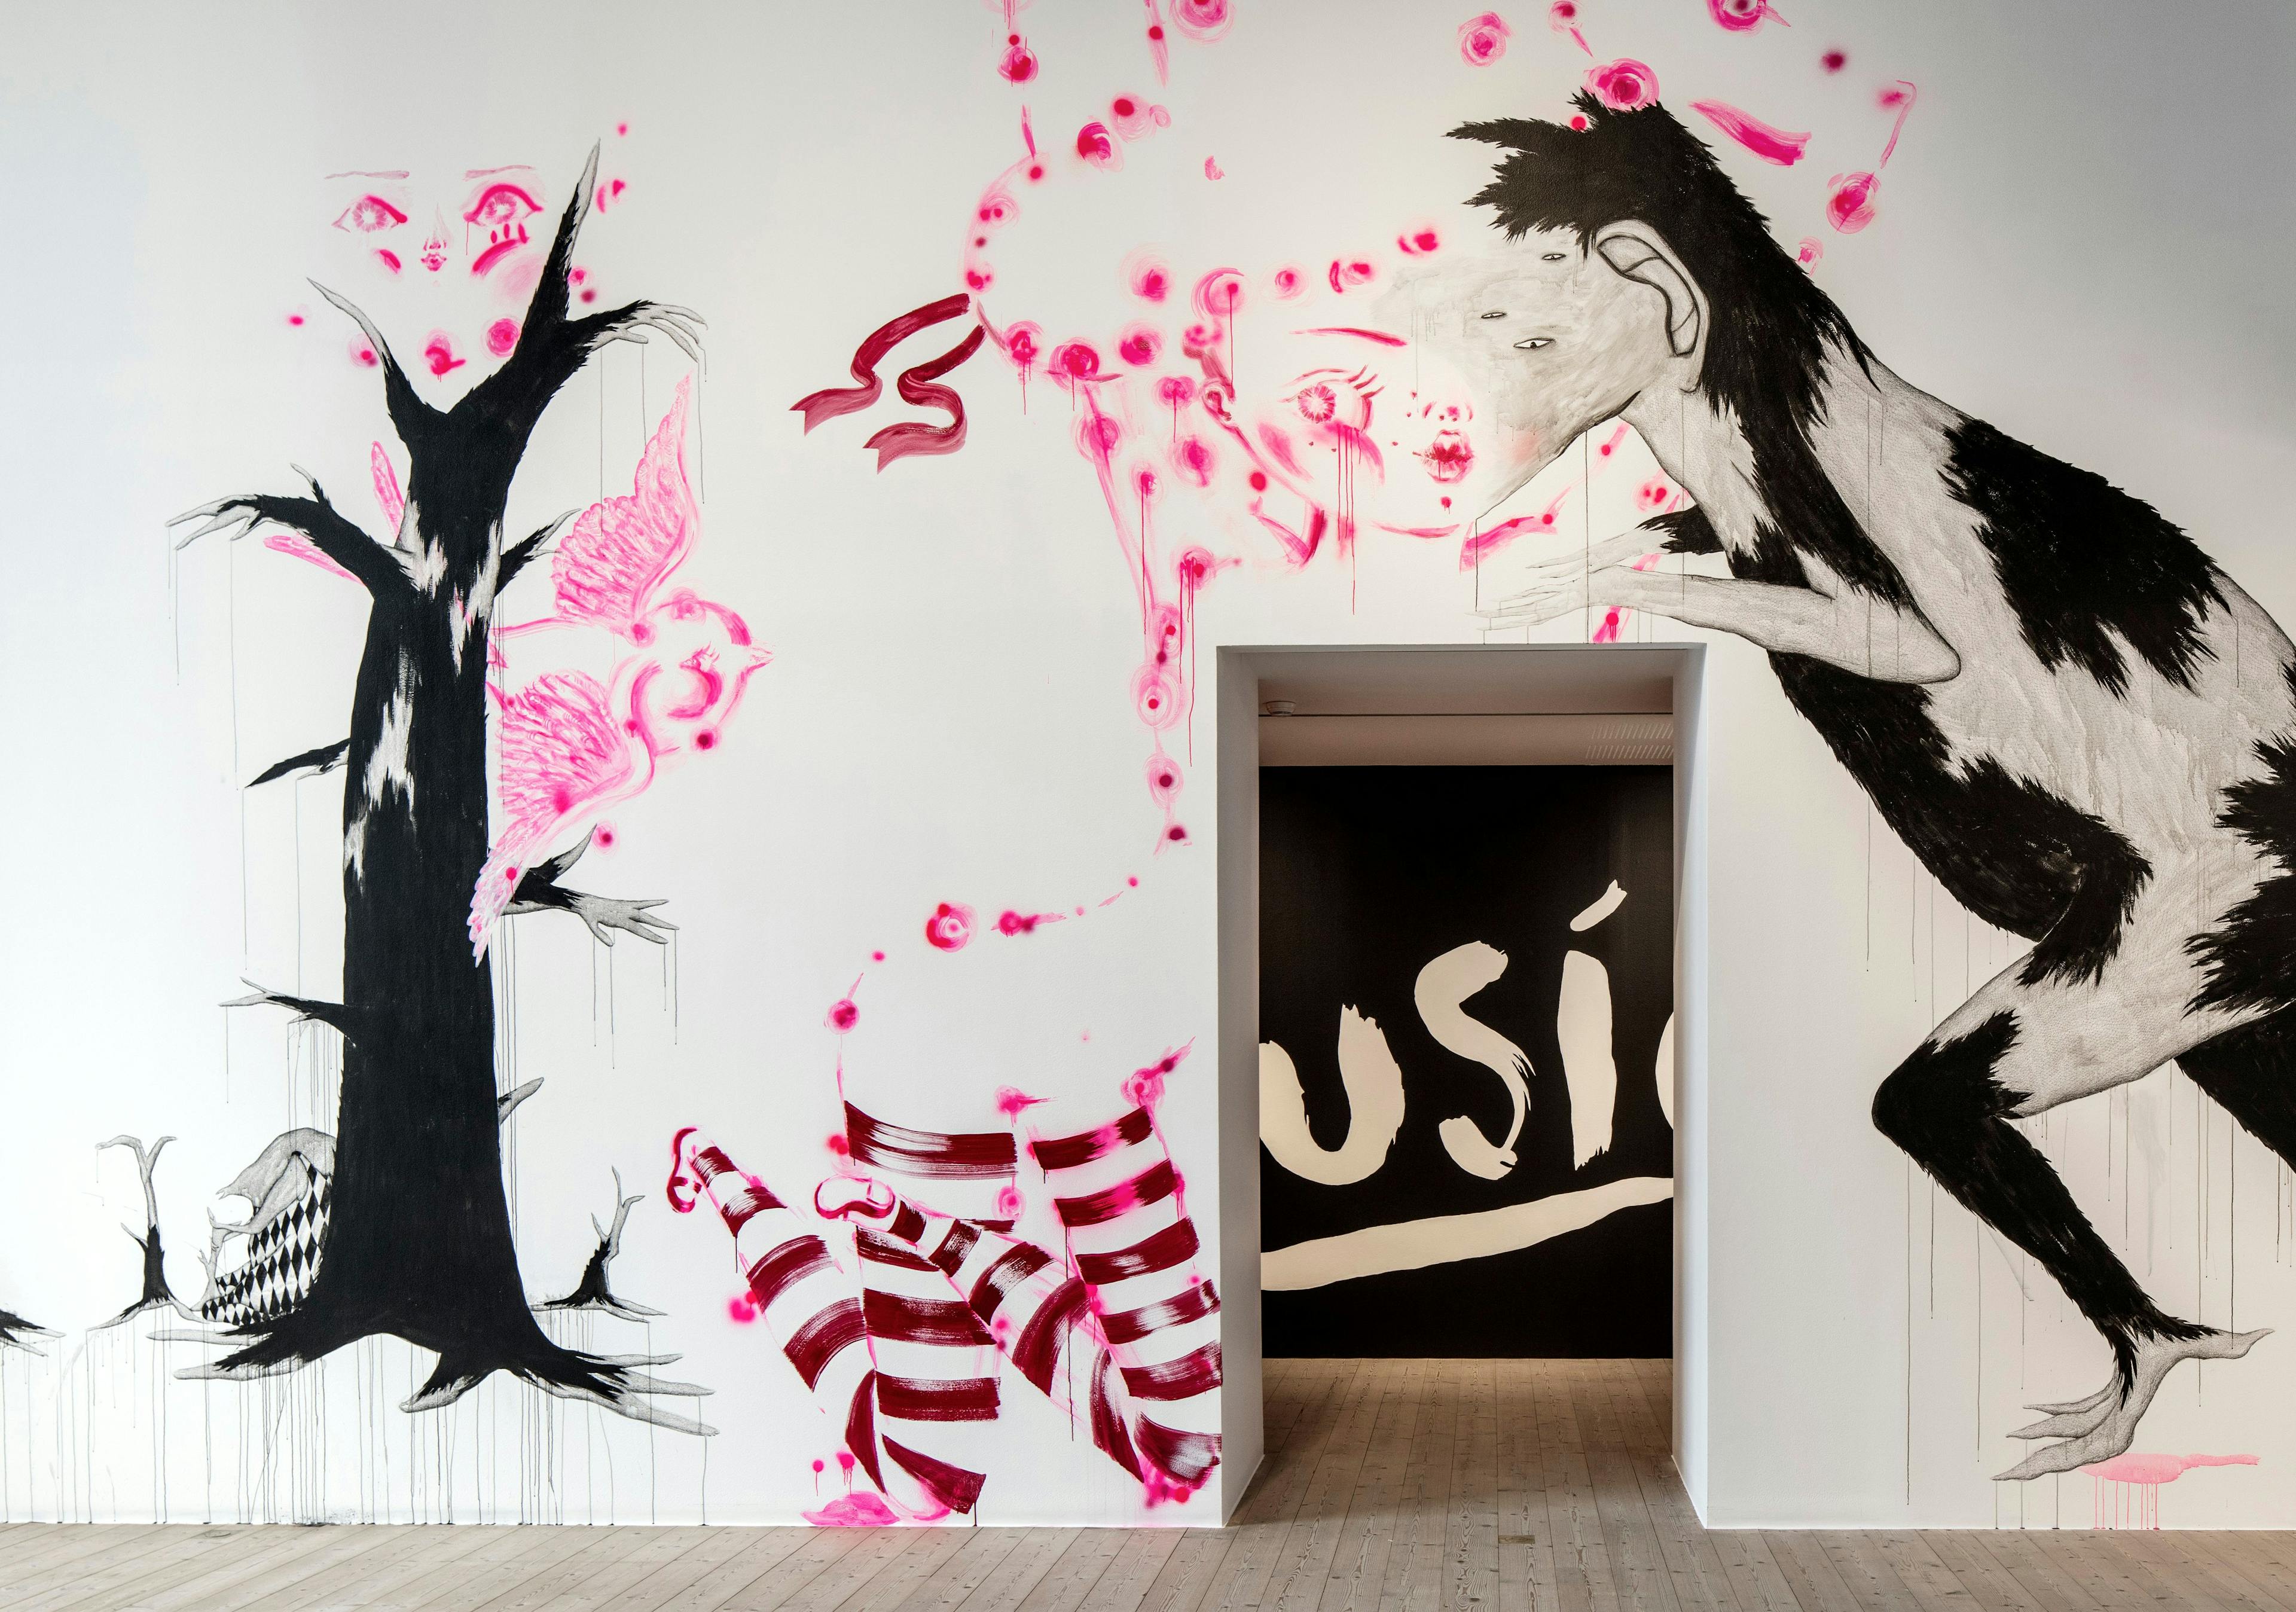 Image of mural inside the museum in black and pink by Sigga Björg Sigurðardóttir and Katja Tukiainen